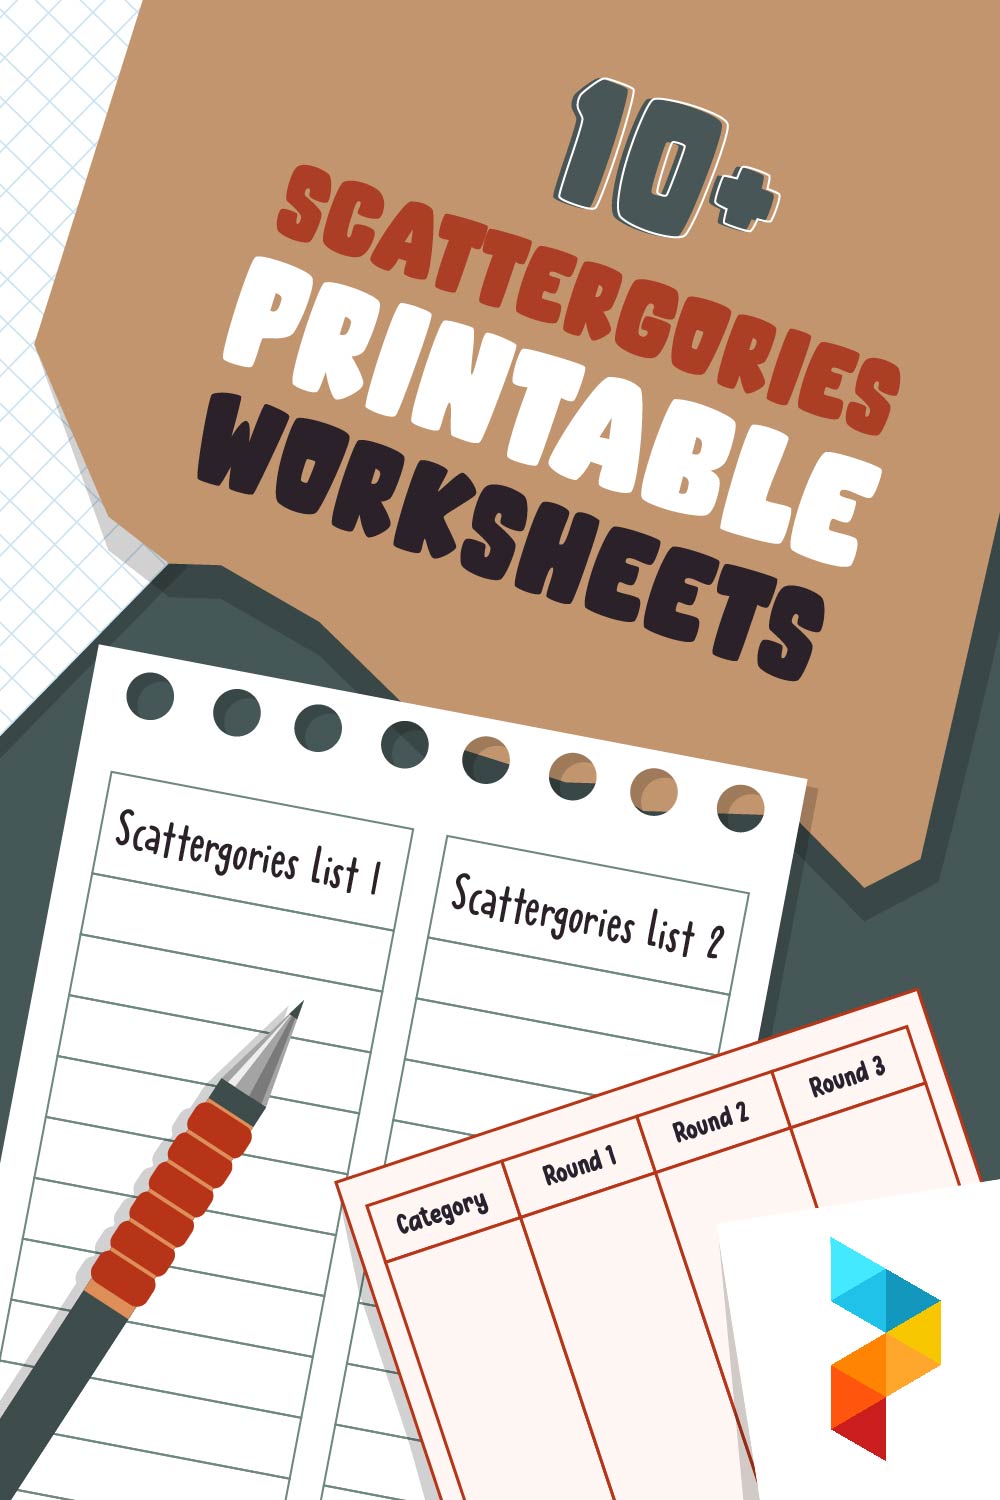 Scattergories Worksheets